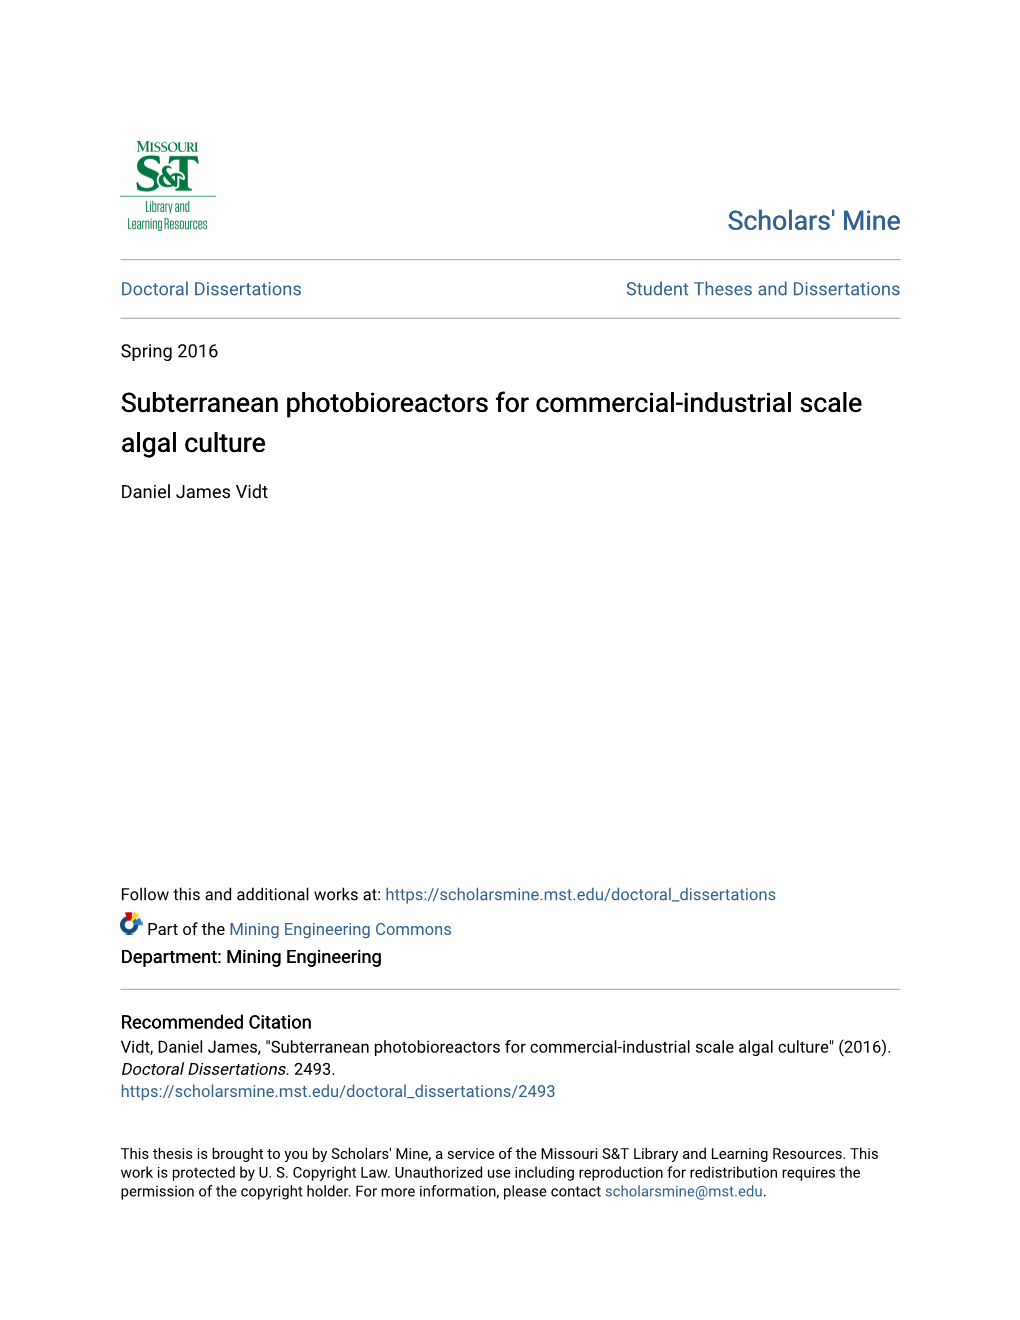 Subterranean Photobioreactors for Commercial-Industrial Scale Algal Culture